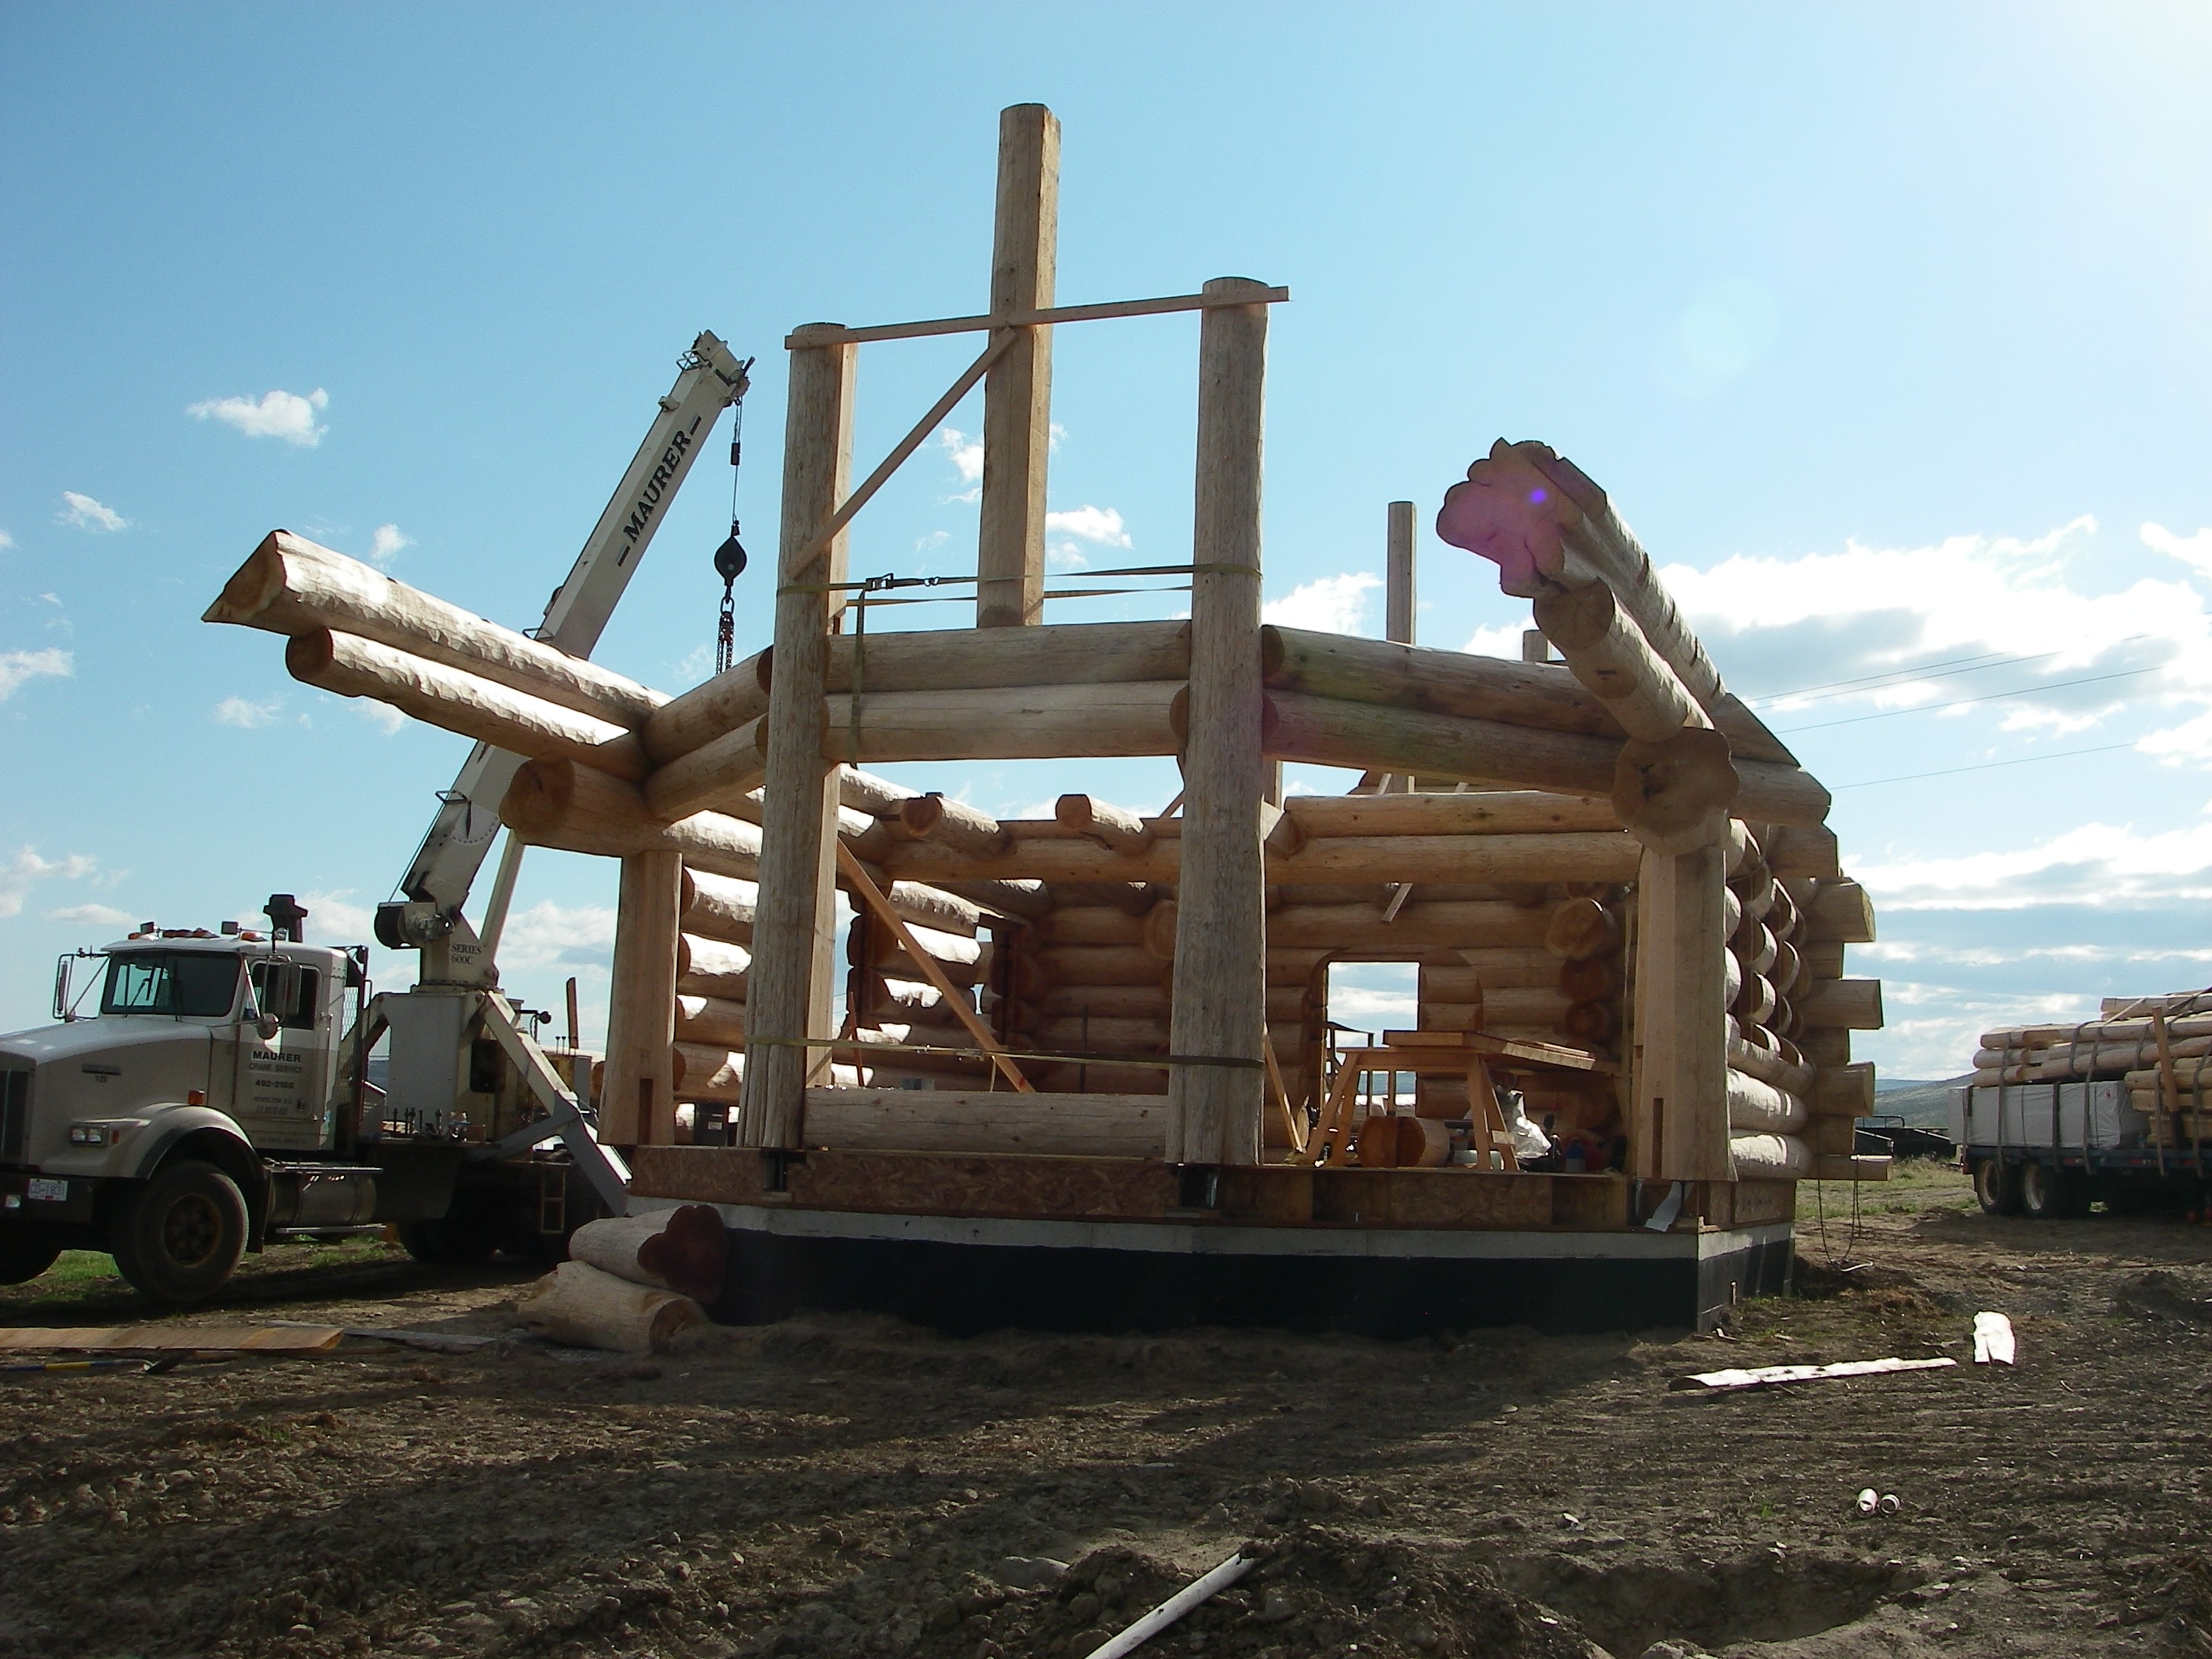 Log home construction in progress